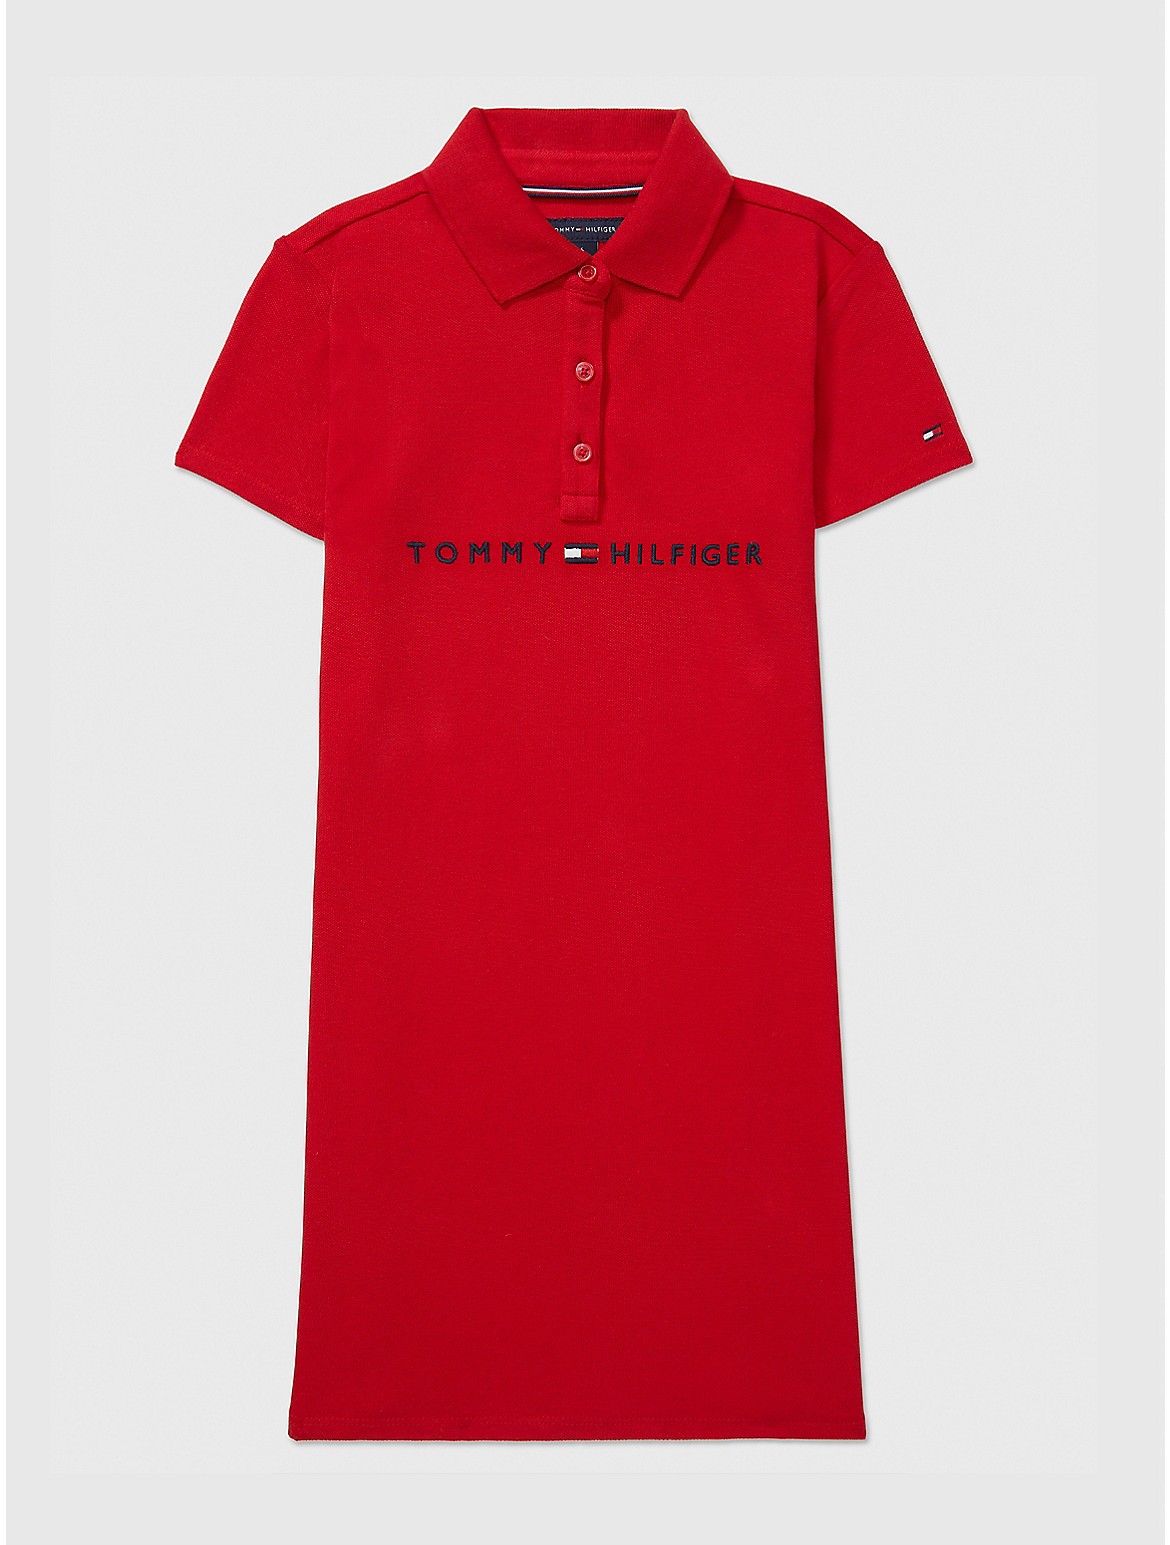 Tommy Hilfiger Girls' Kids' Embroidered Tommy Logo Dress - Red - L